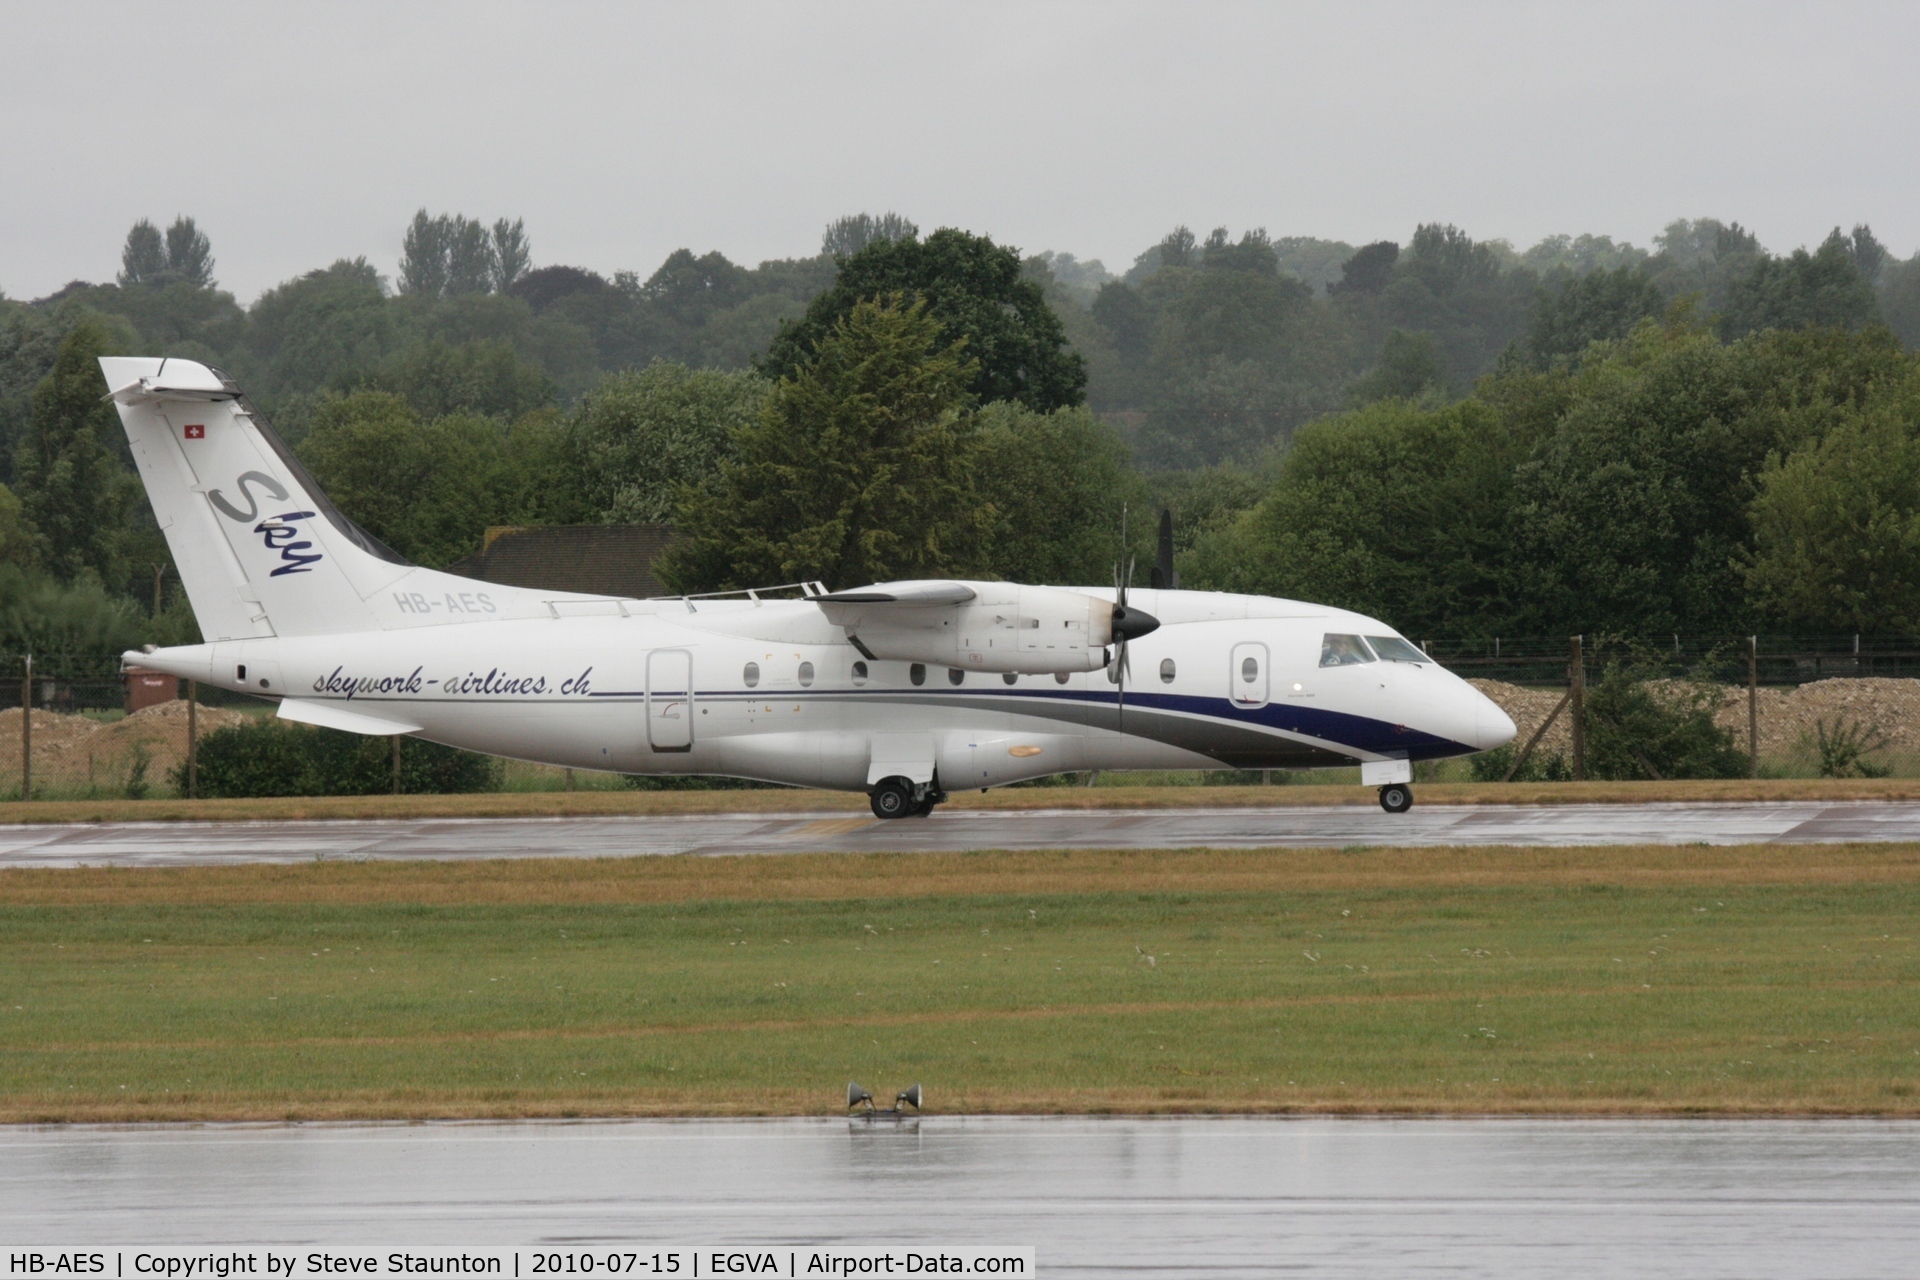 HB-AES, 1995 Dornier 328-110 C/N 3021, Taken at the Royal International Air Tattoo 2010